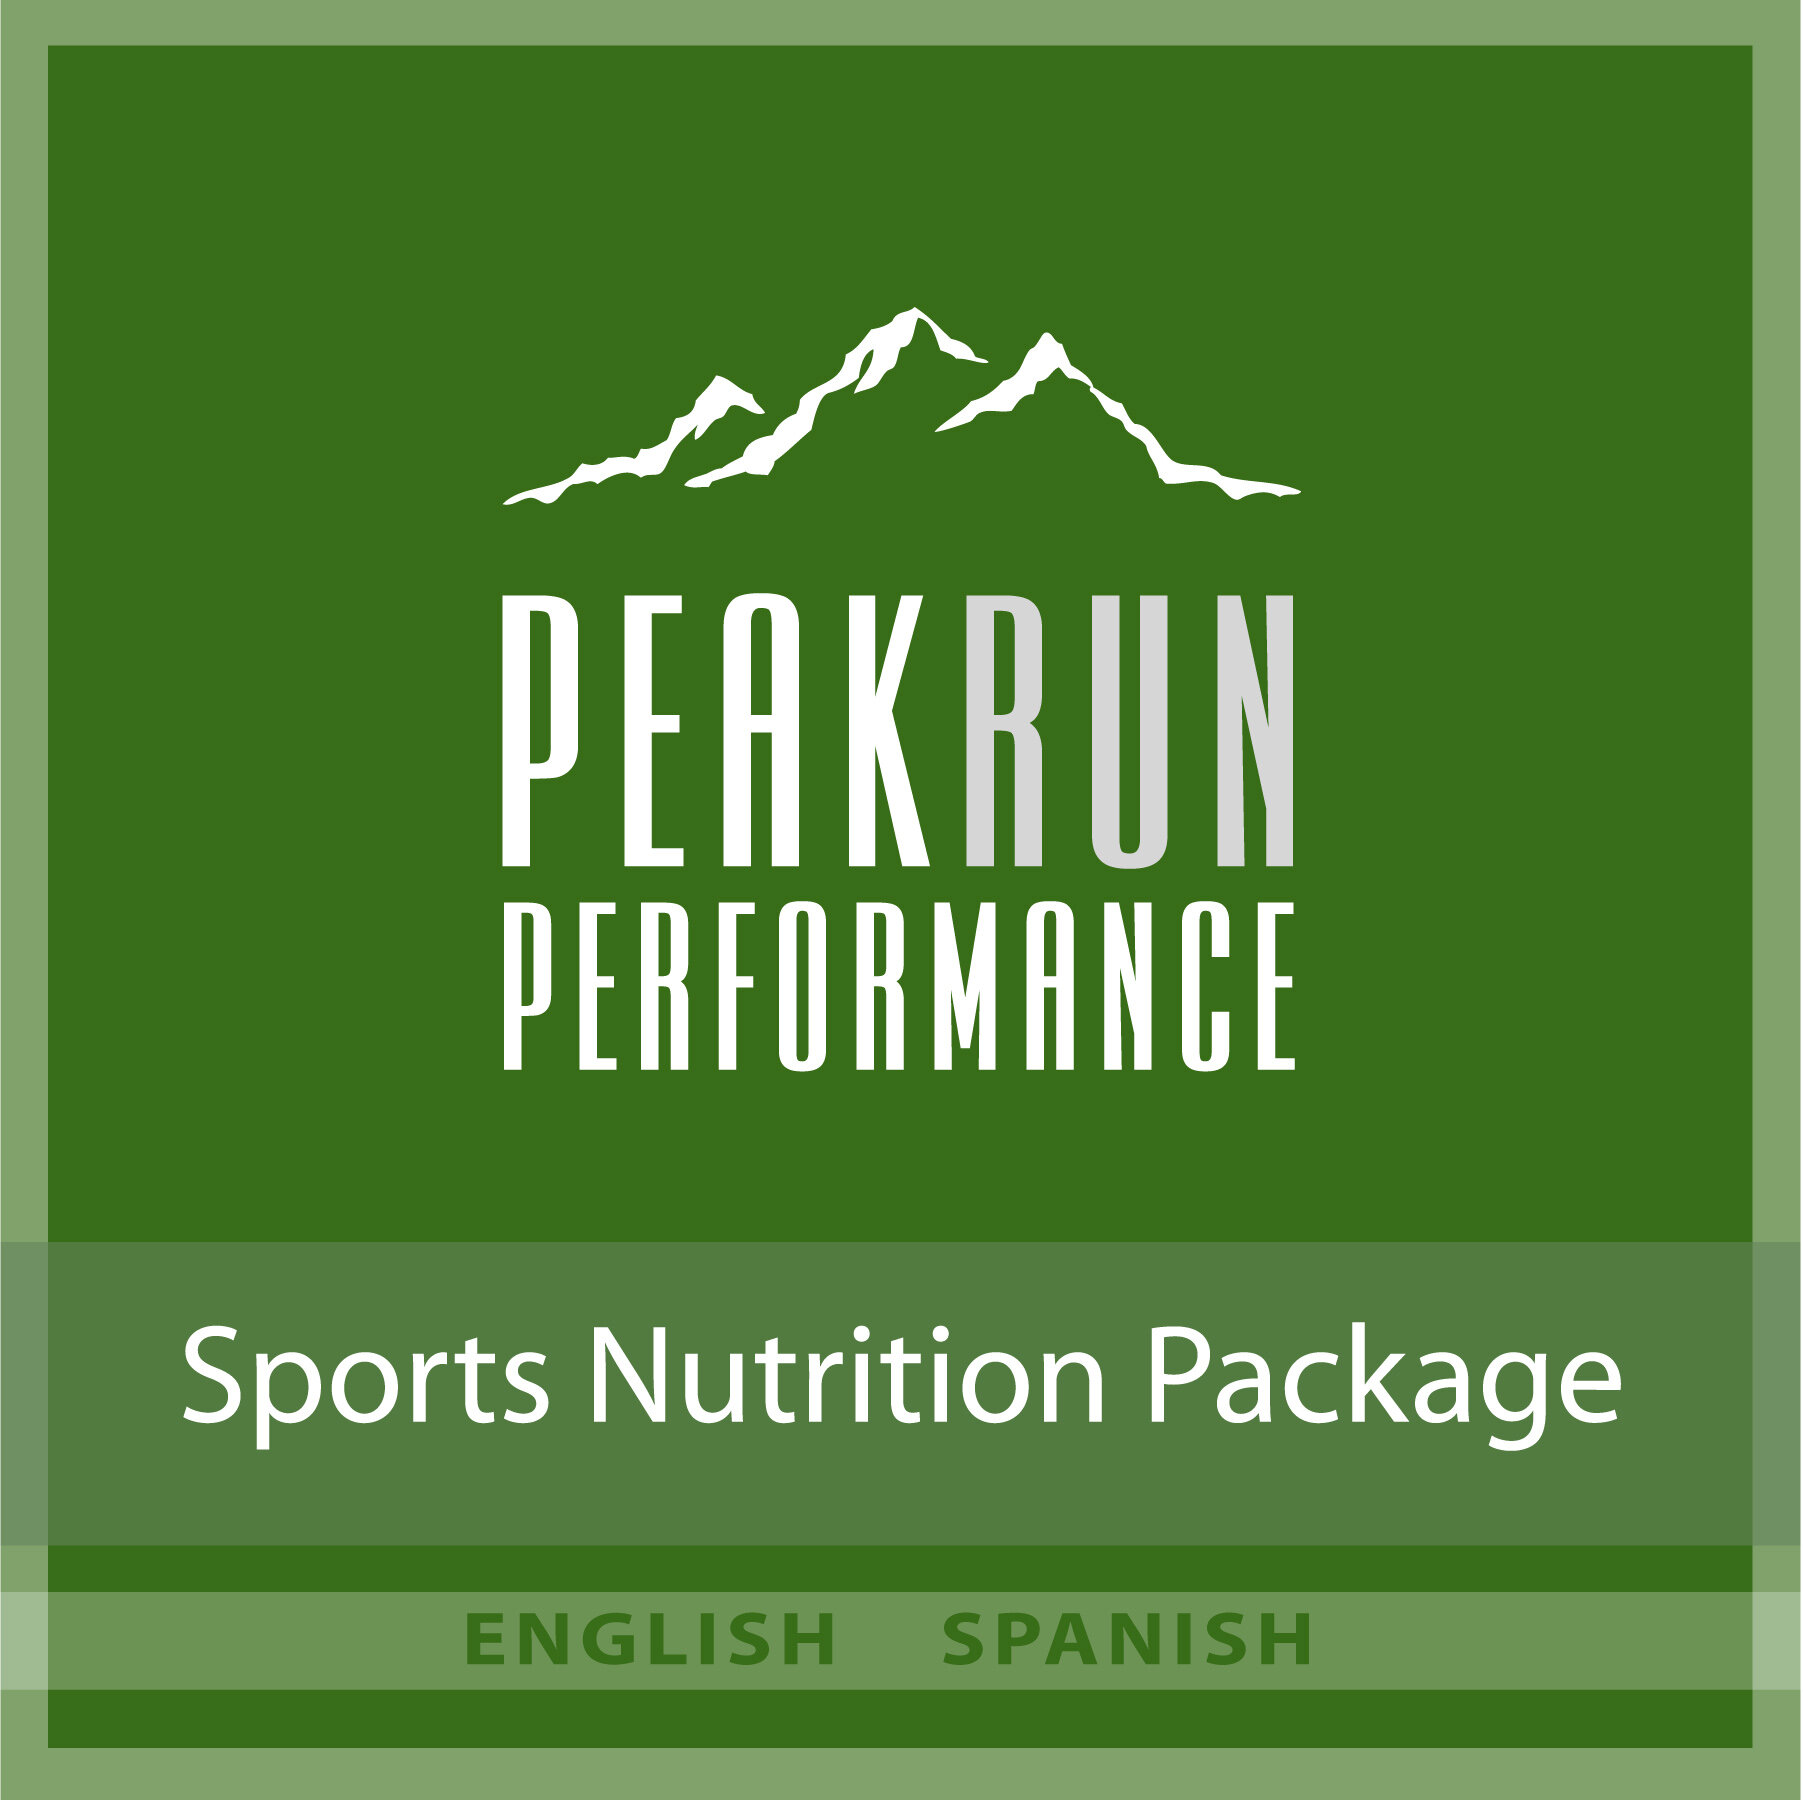 Sports Nutrition Package - Green.jpg